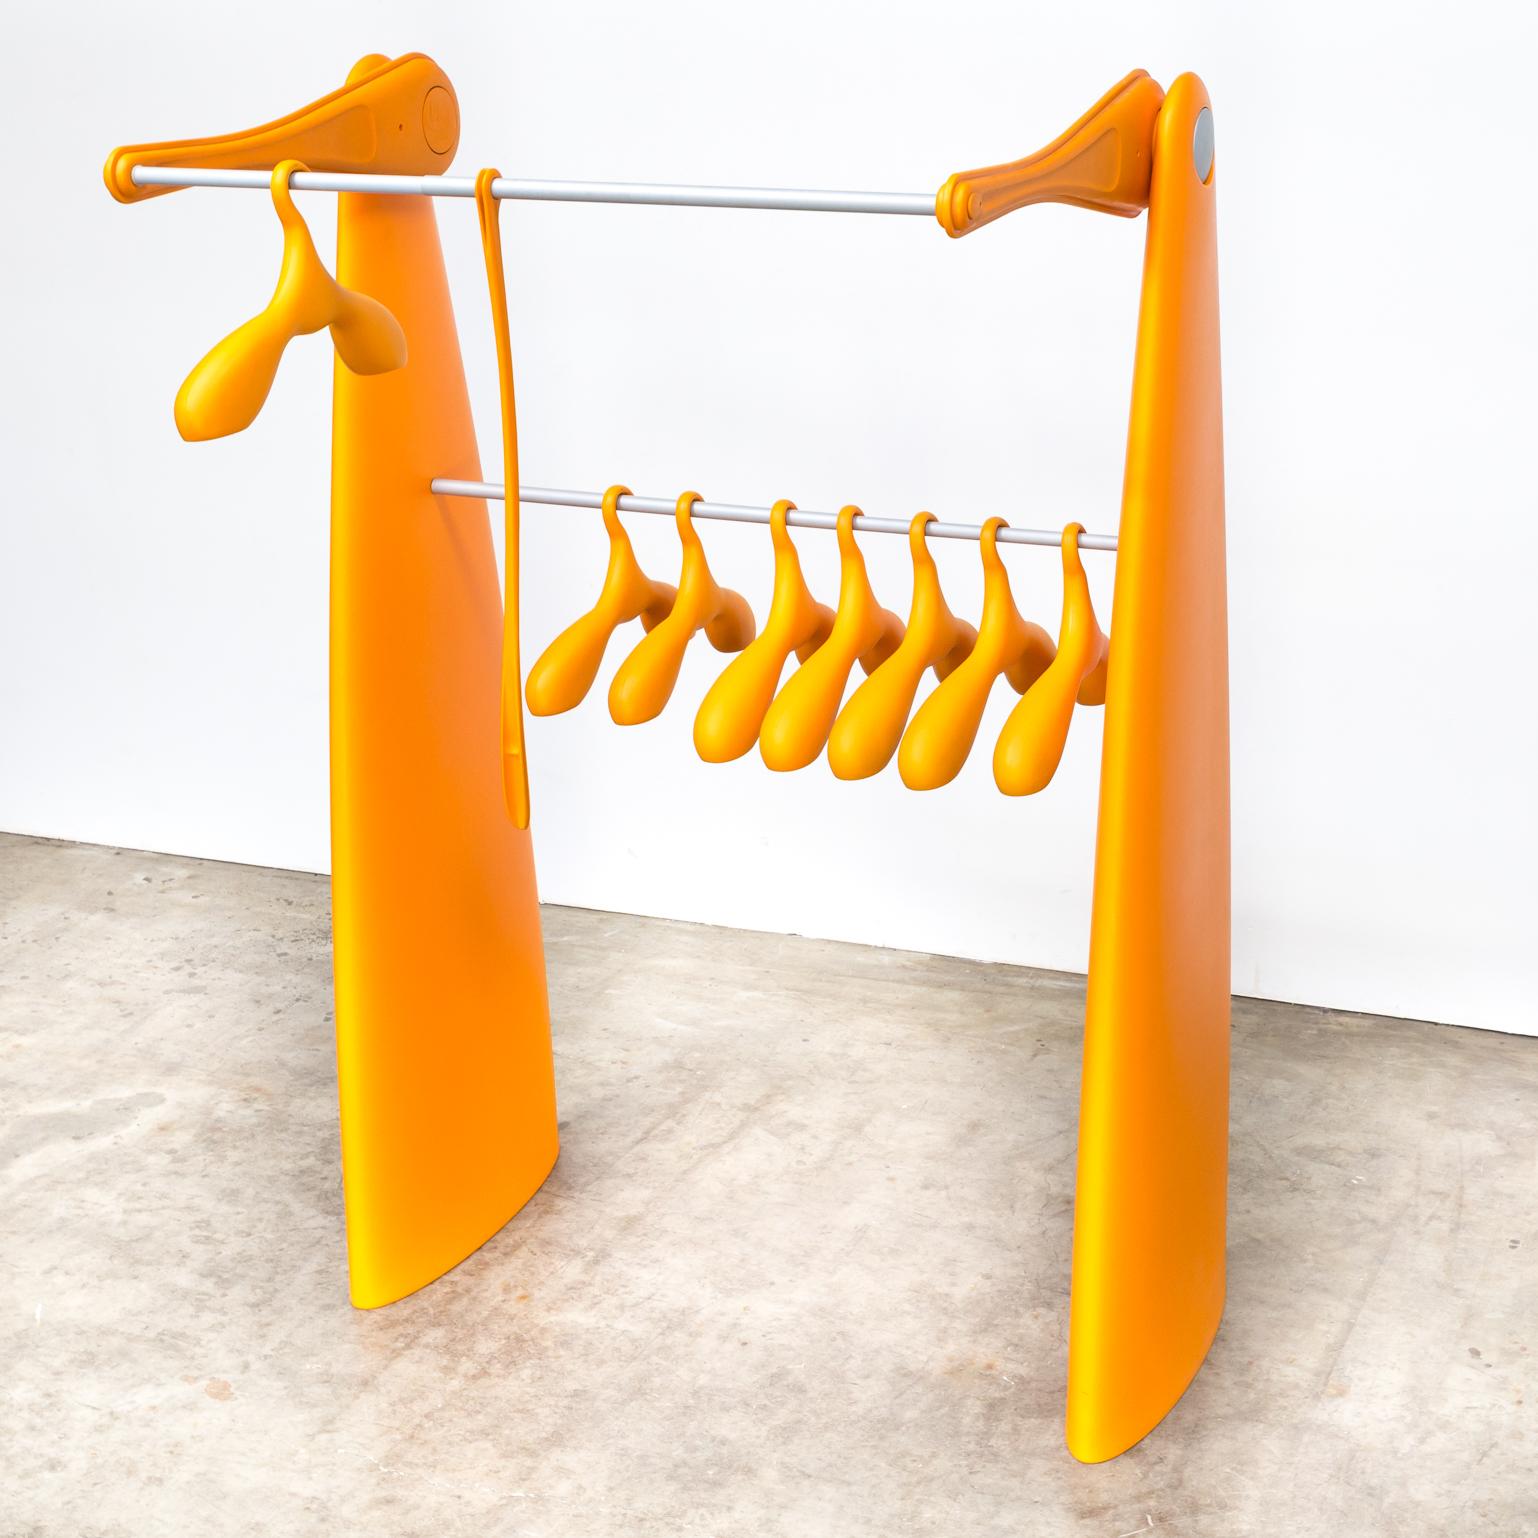 E. Terragni Coat Stand ‘Atelier’ & Servetto Lift and Dino Clothes Hangers For Sale 4